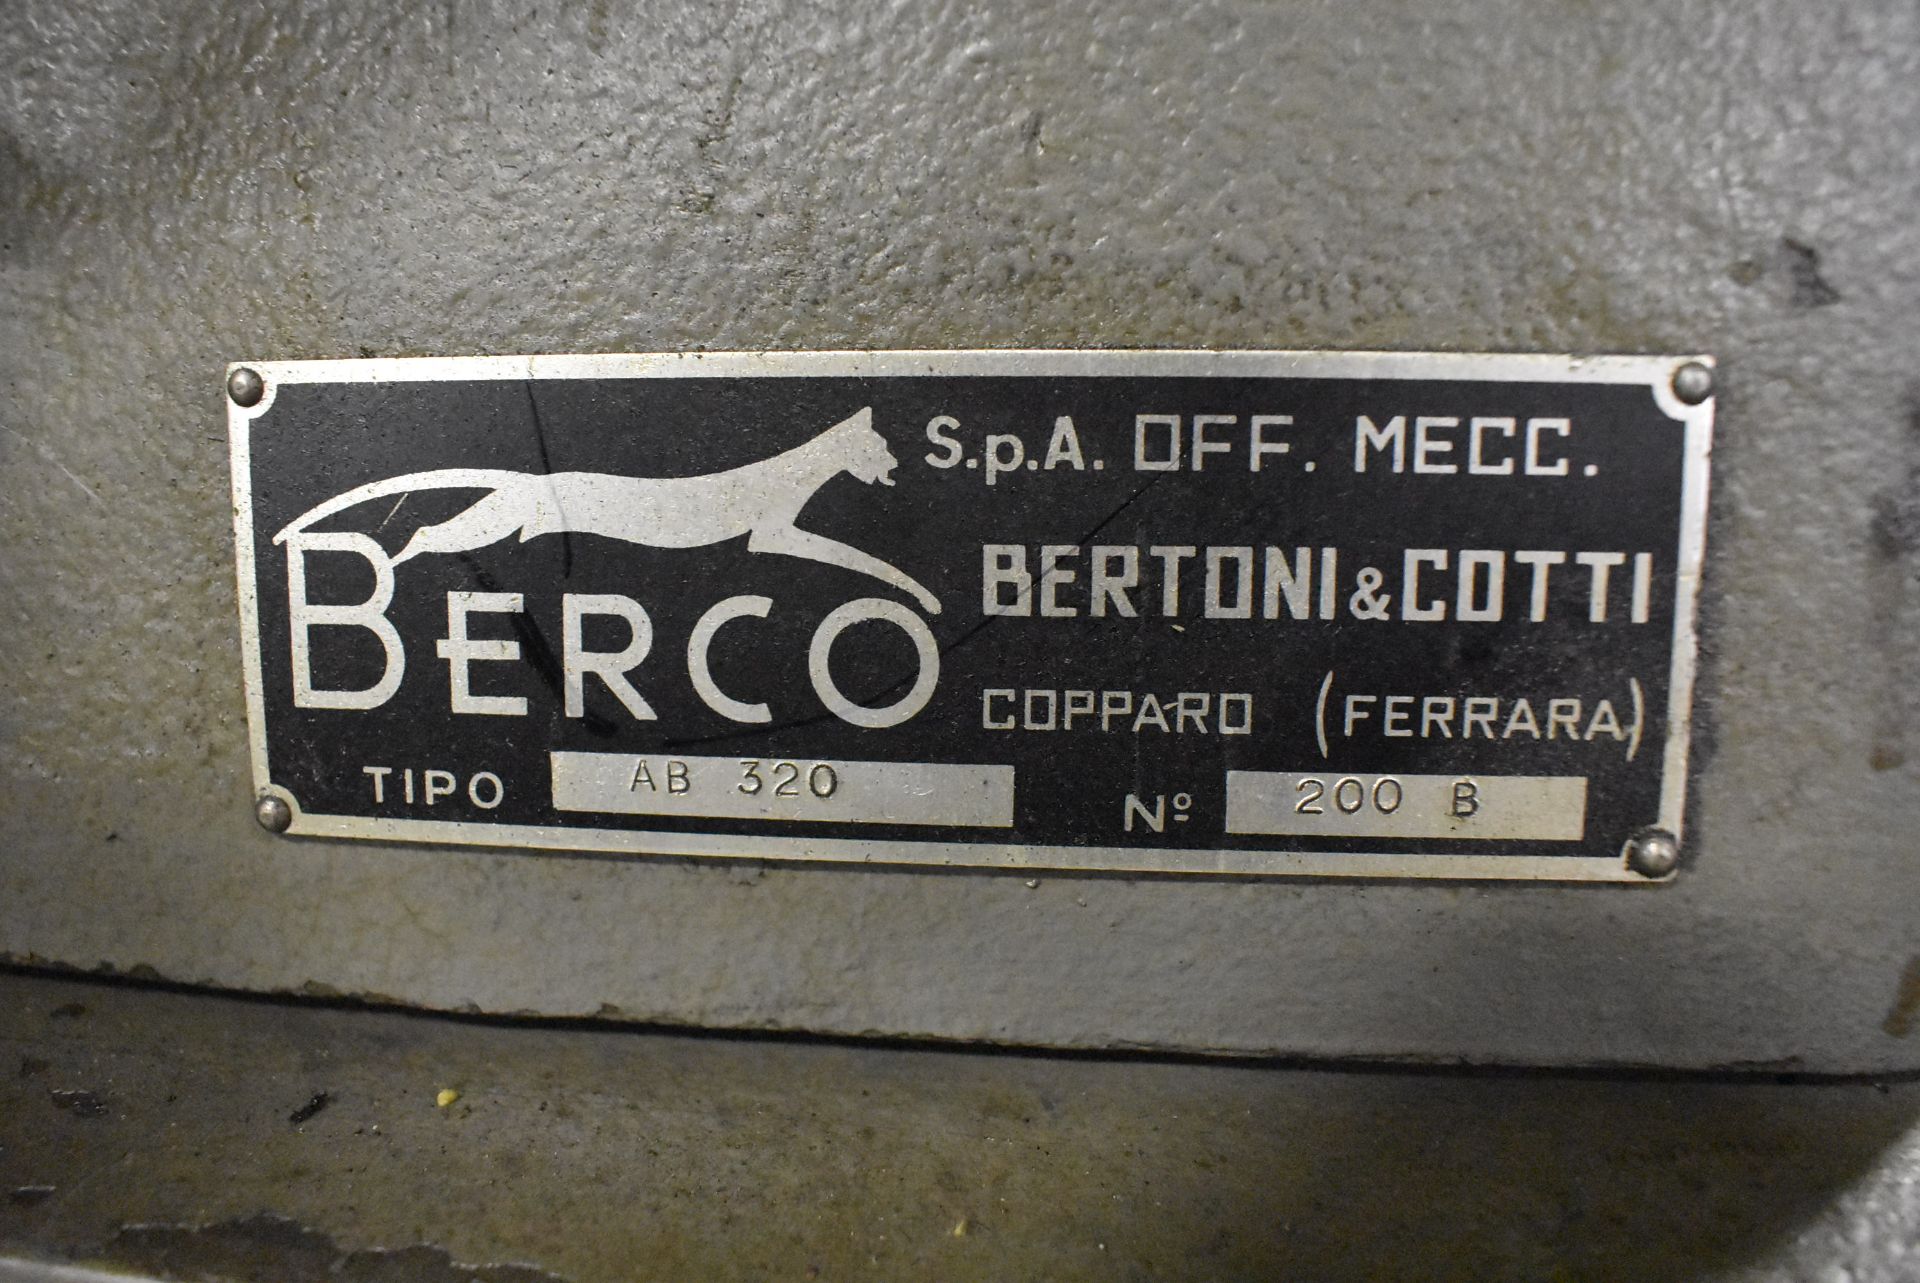 BERCO MODEL AB-320 ROD BORING MACHINE S/N 200B, BORING DIAMETER 33/64" TO 5-29/32", CENTER TO CENTER - Image 3 of 10